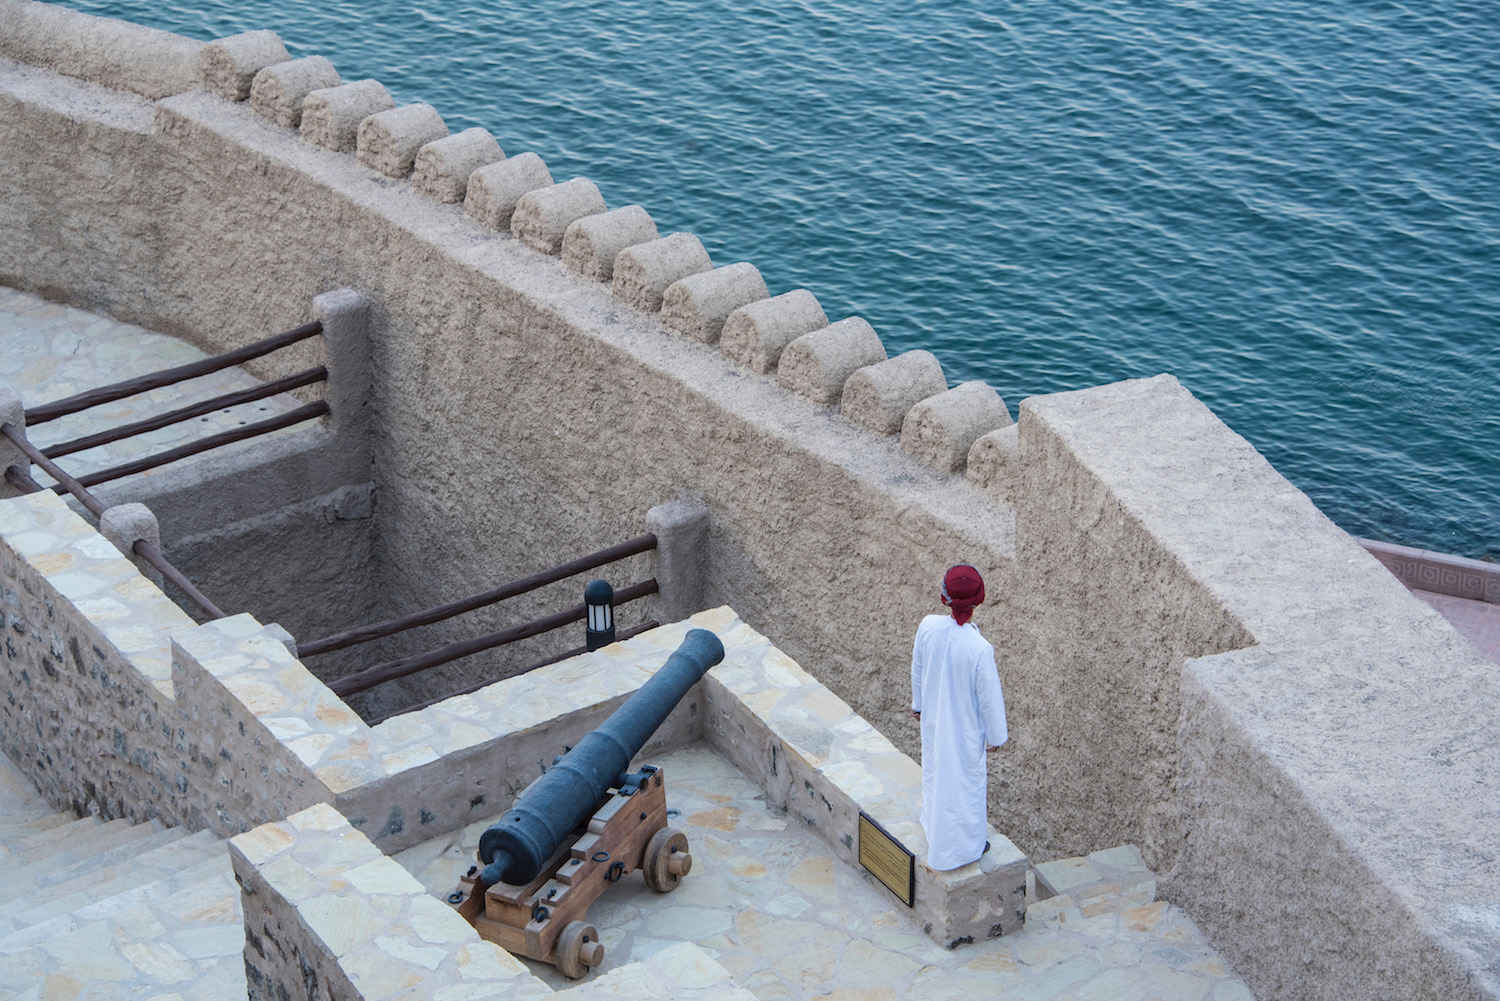 Muscat Oman